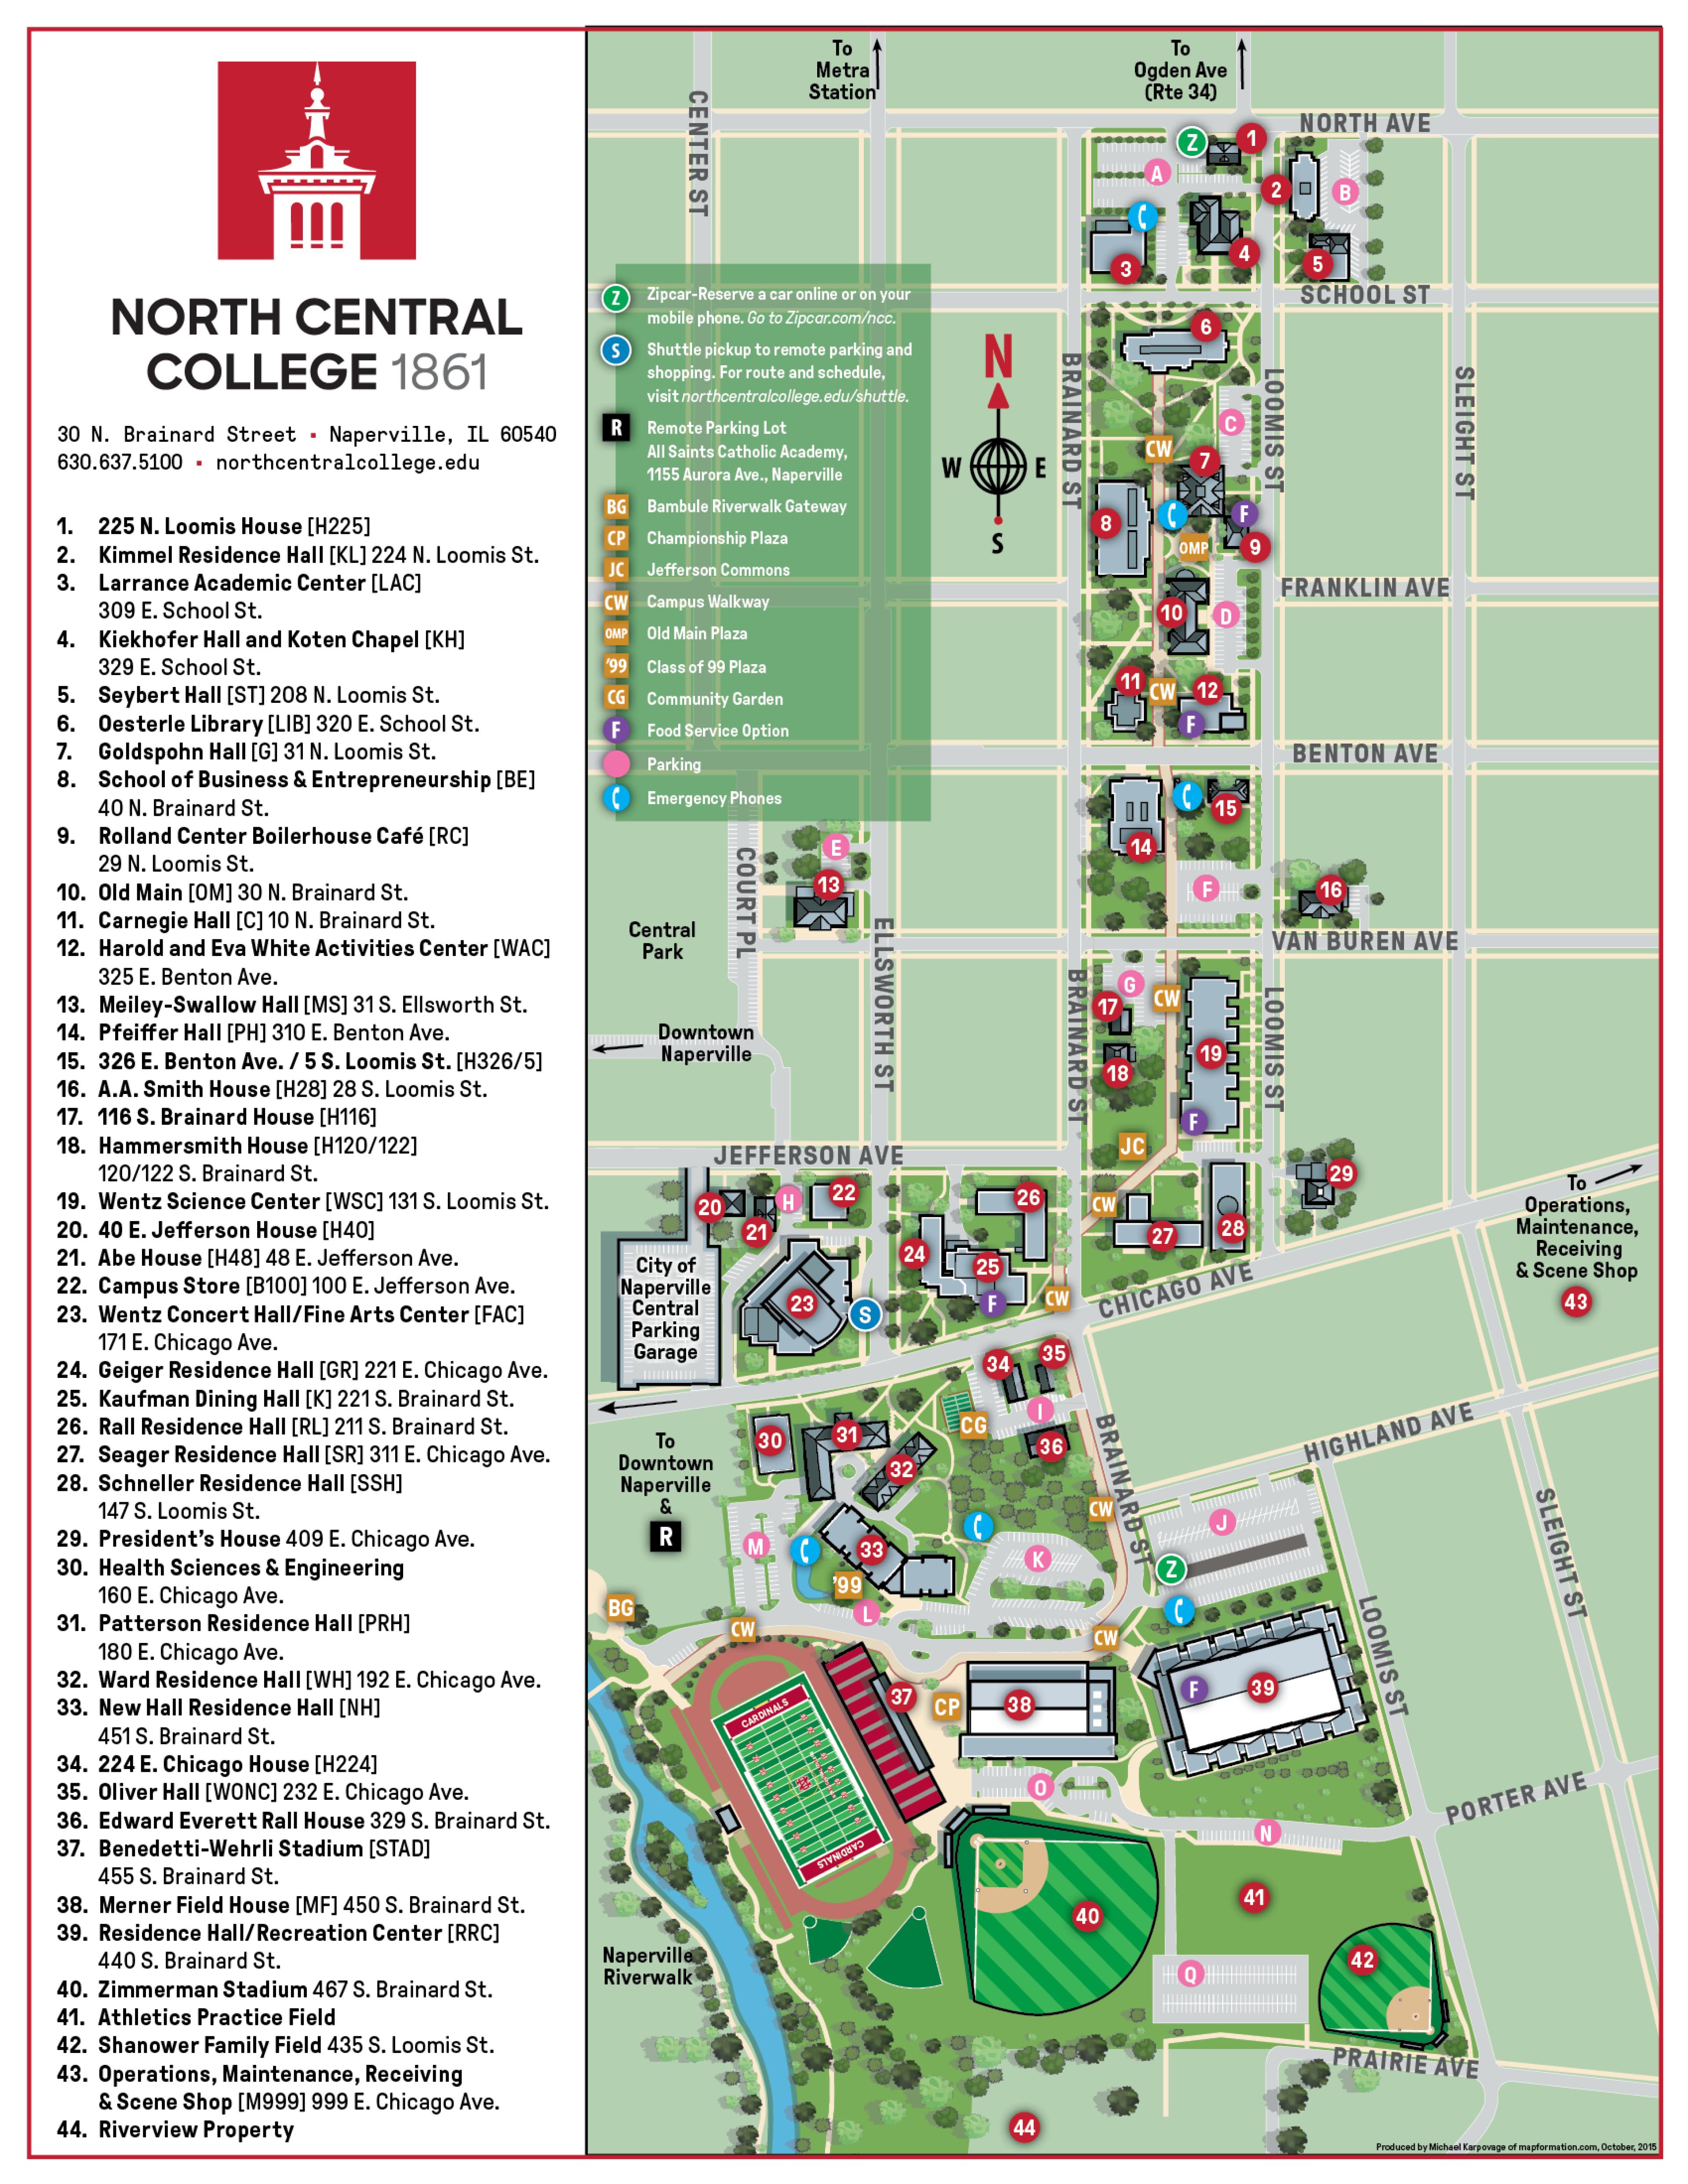 north central college campus visit